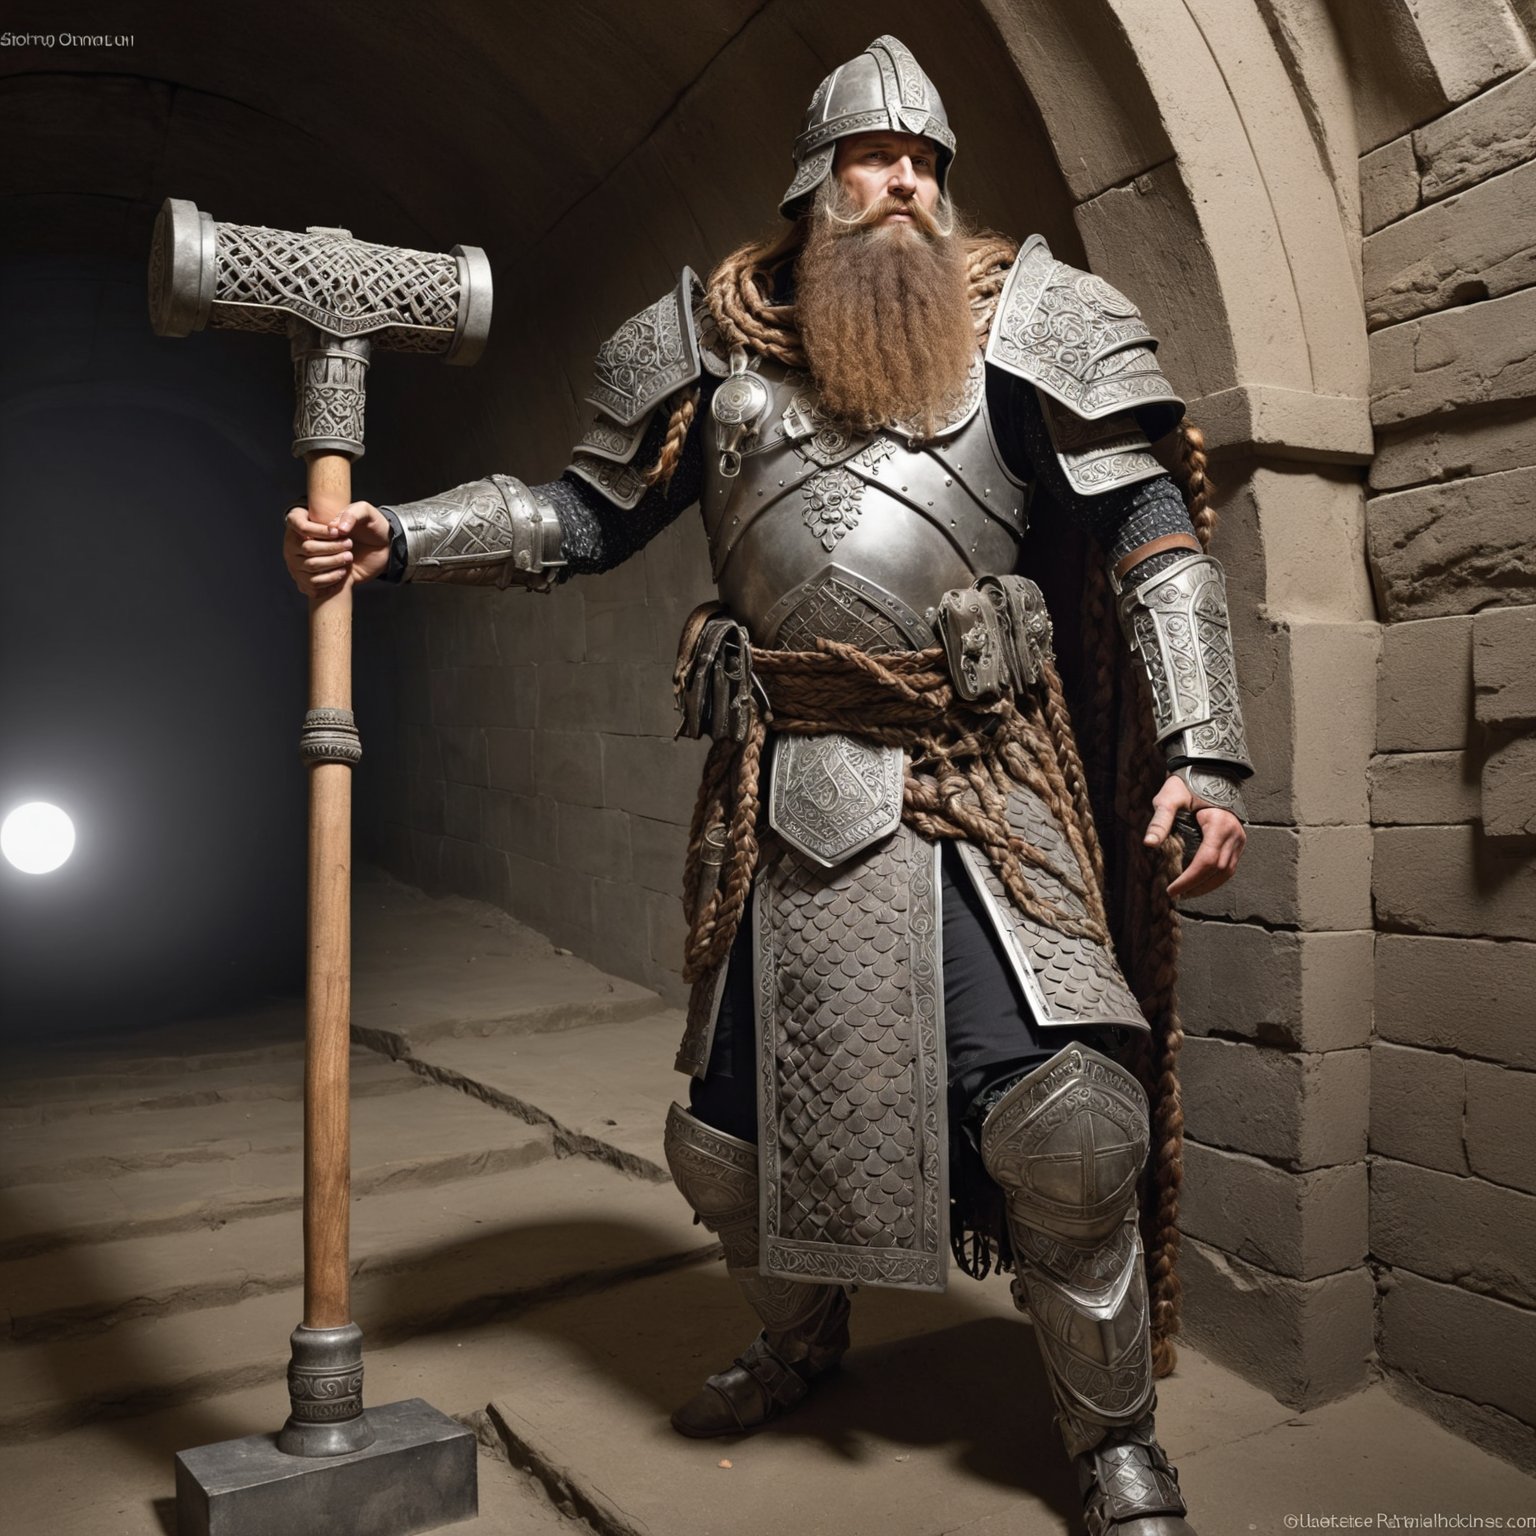 Dwarven crusader, intricately detailed plate armor, ((sledgehammer)), long giant braided beard, underground tunnels, intricate detail